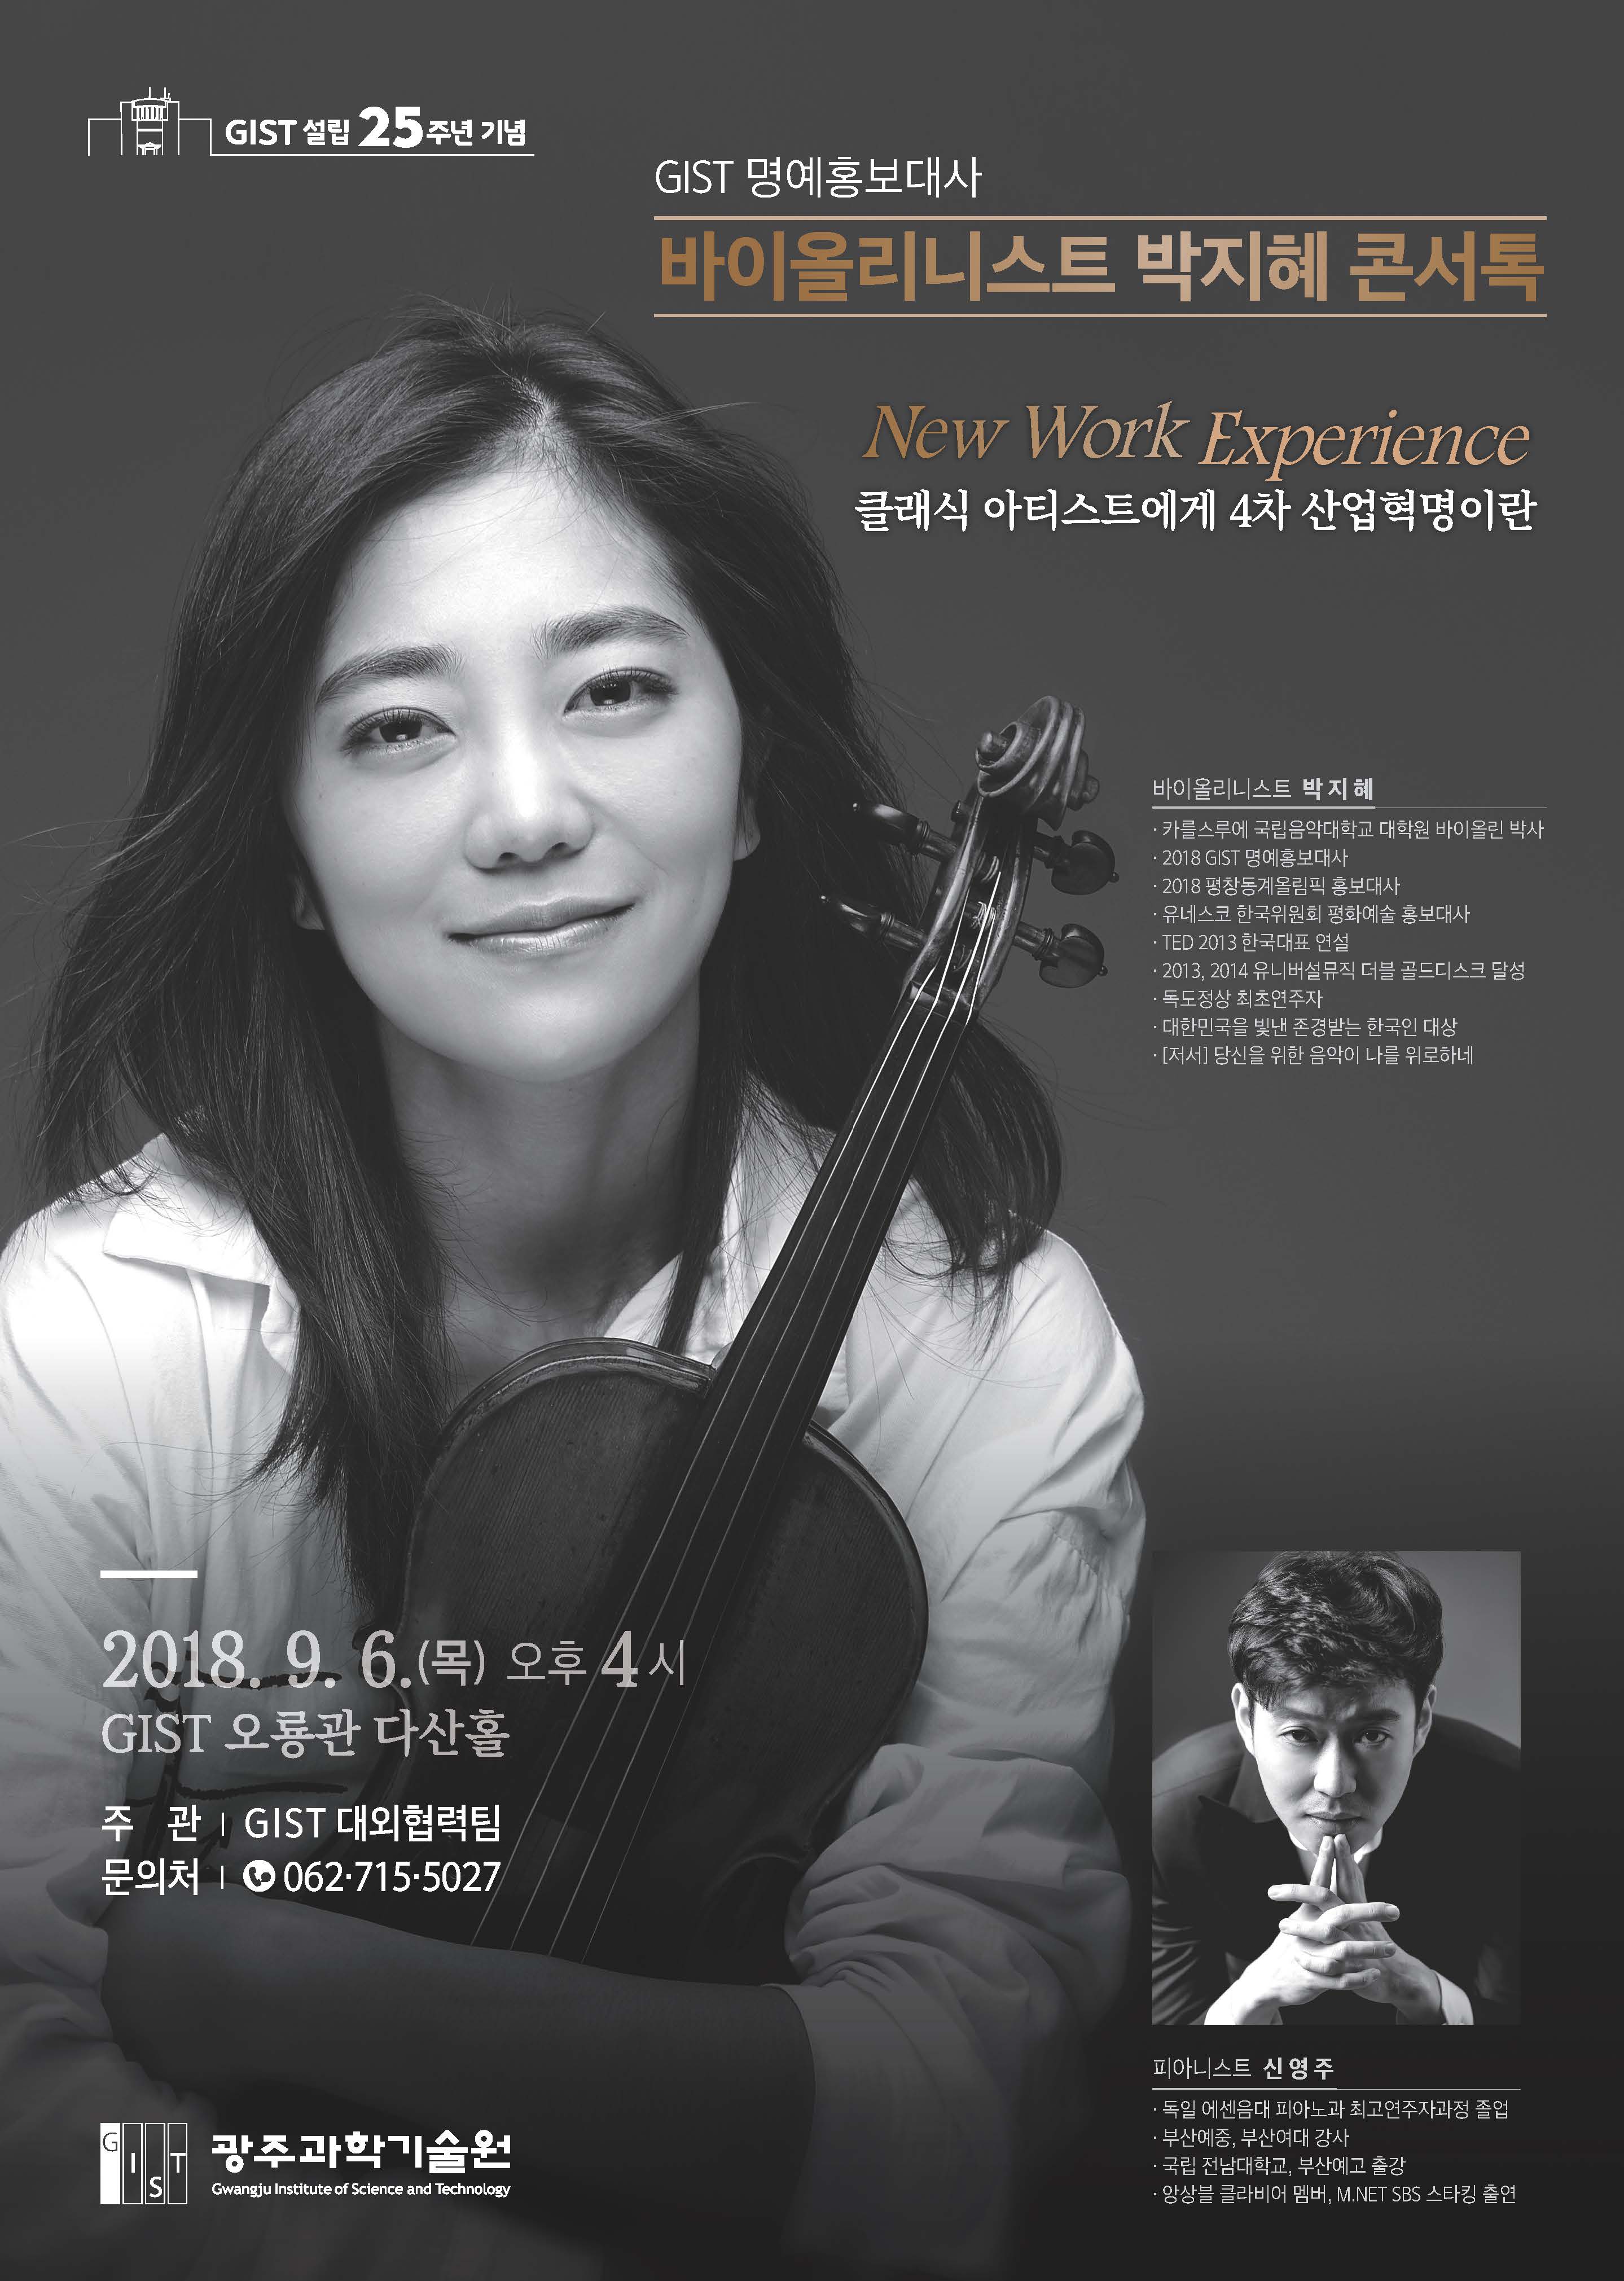 GIST 25th Anniversary Celebration on September 6th (Thurs): GIST Honorary Ambassador Ji-Hae Park performs concert 이미지